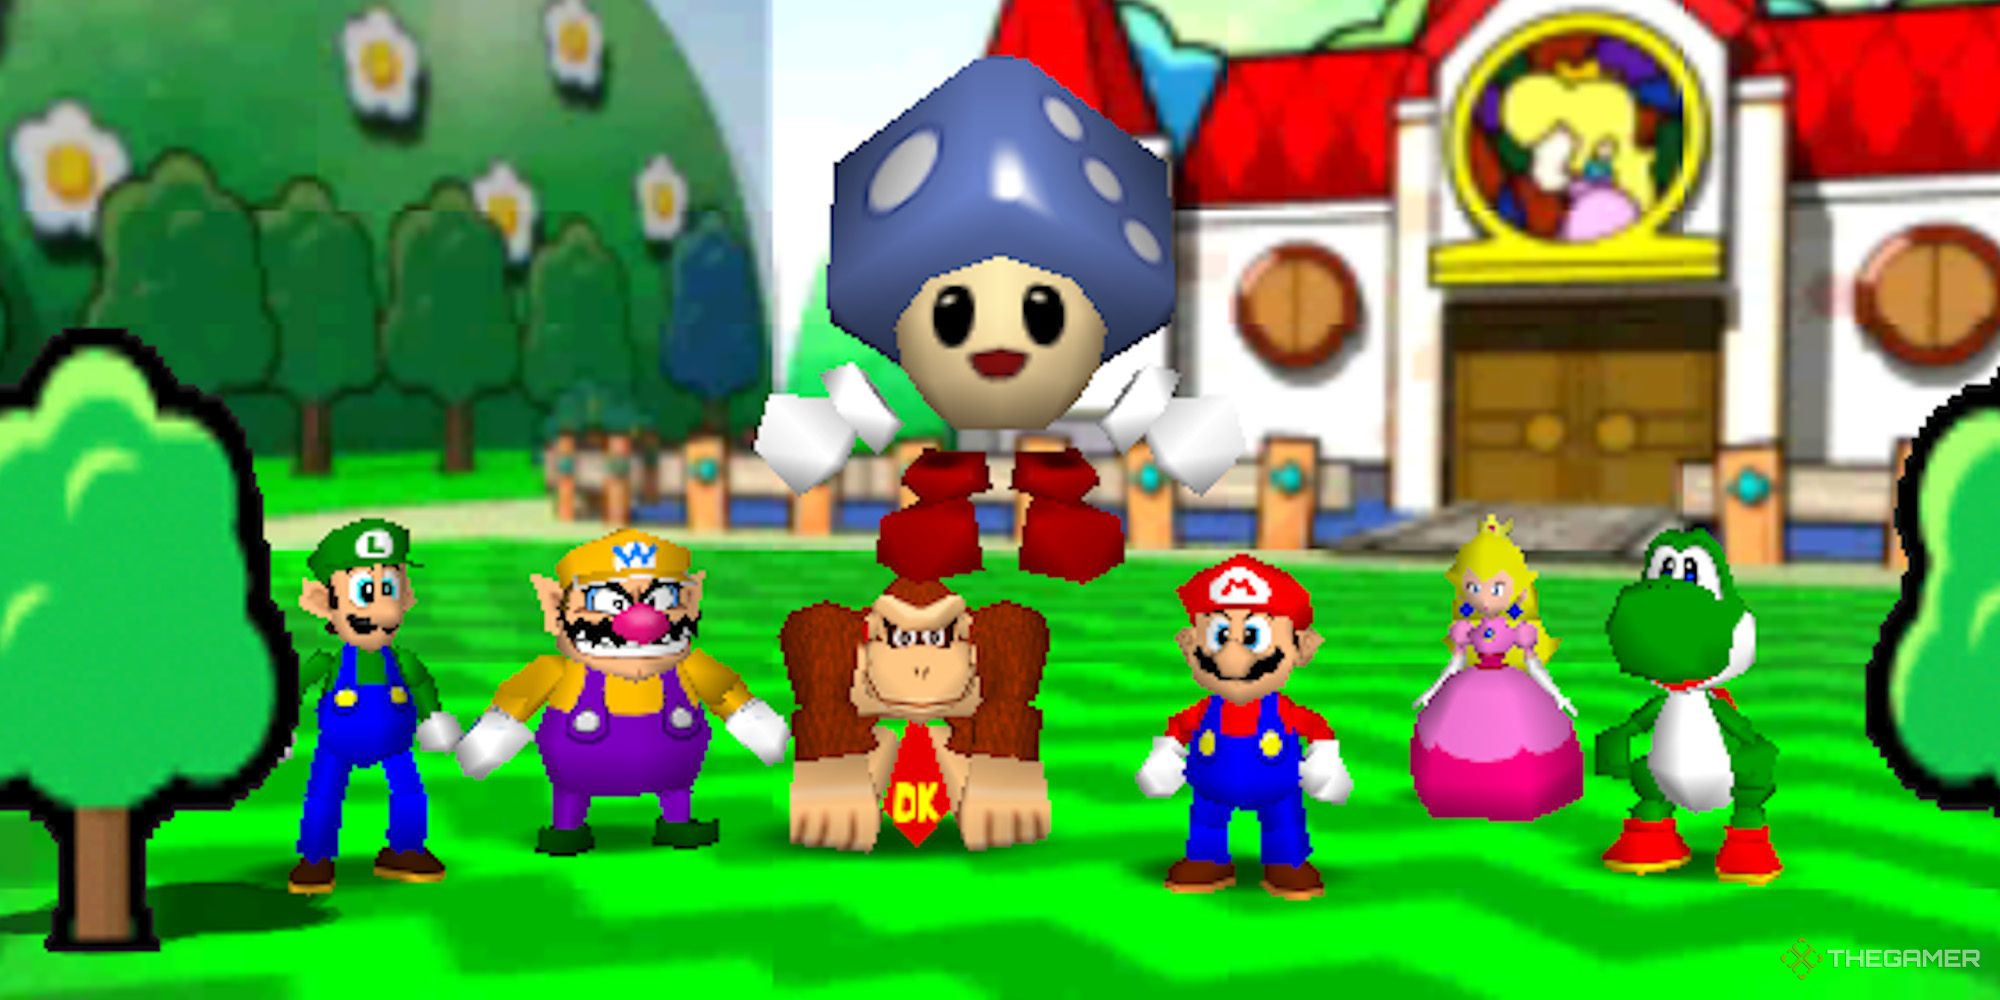 Mario Party 3 - Mario, Luigi, Peach, Wario, Donkey Kong, Peach, Yoshi, and Tumble standing in front of Peach's castle